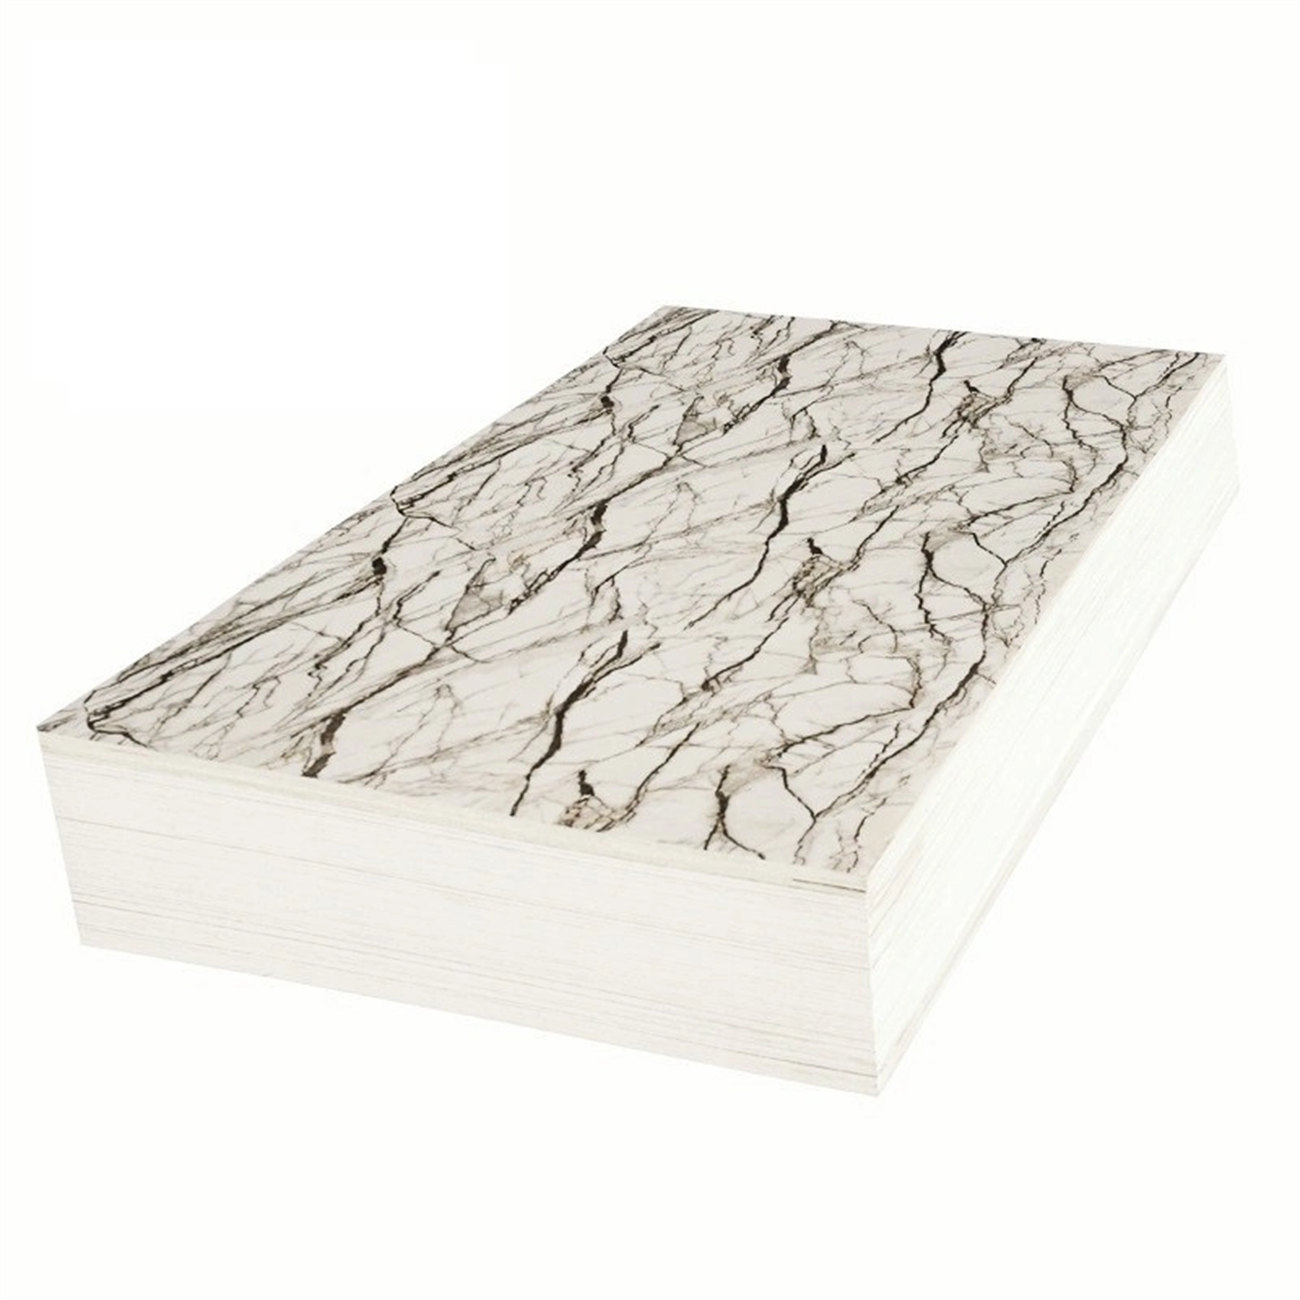 PVC marble sheet 5